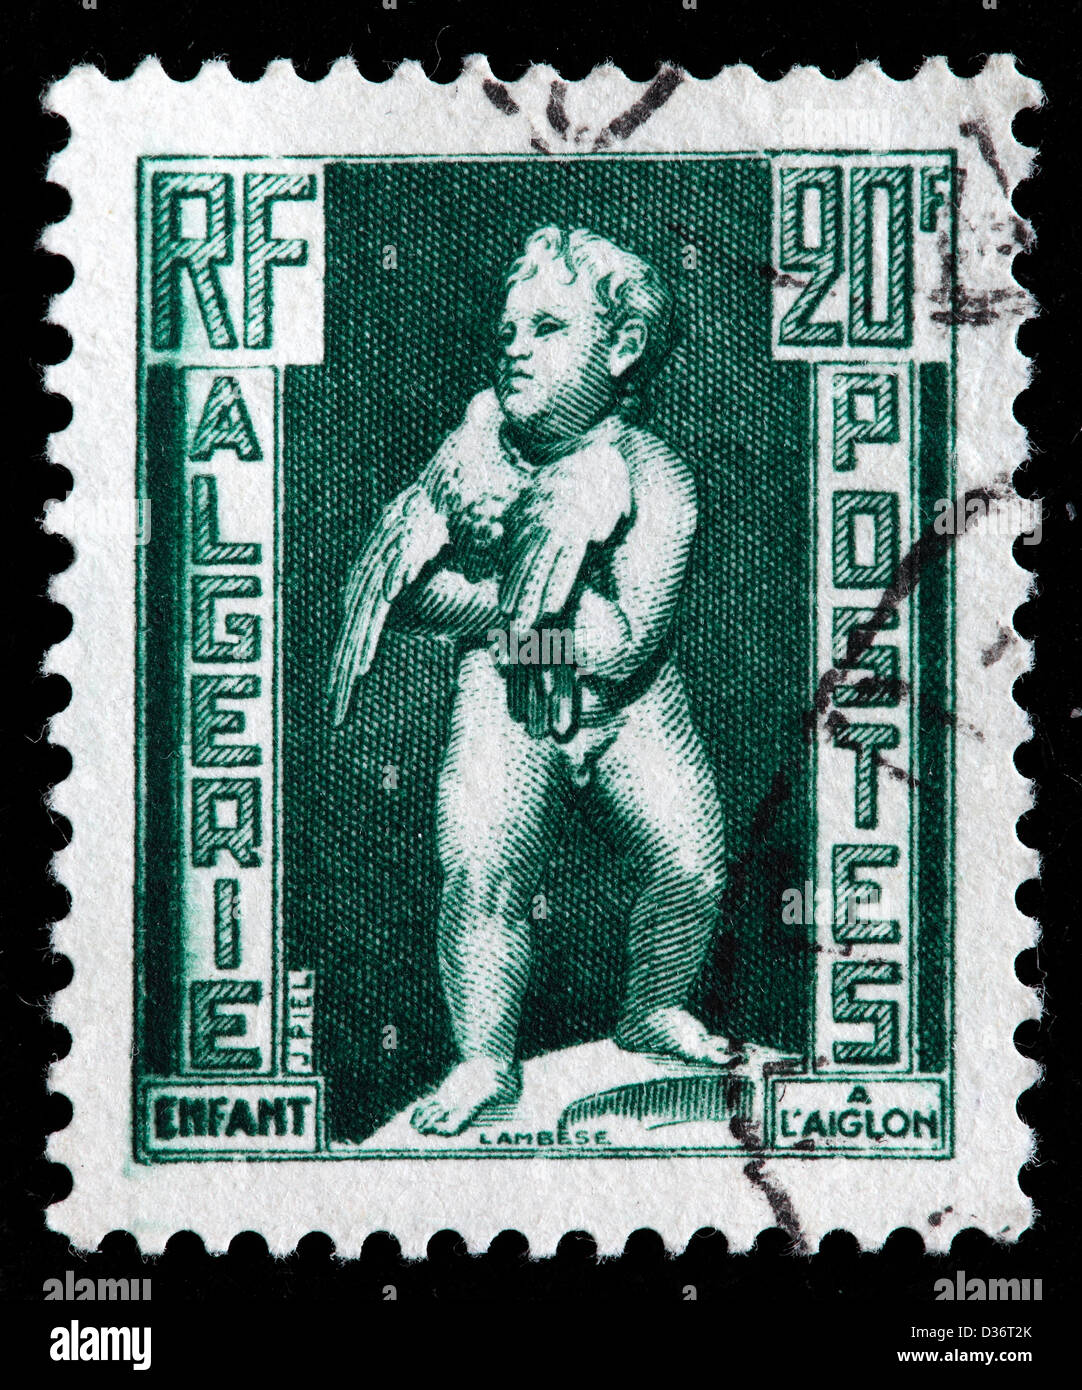 Child with eagle, postage stamp, Algeria, 1952 Stock Photo